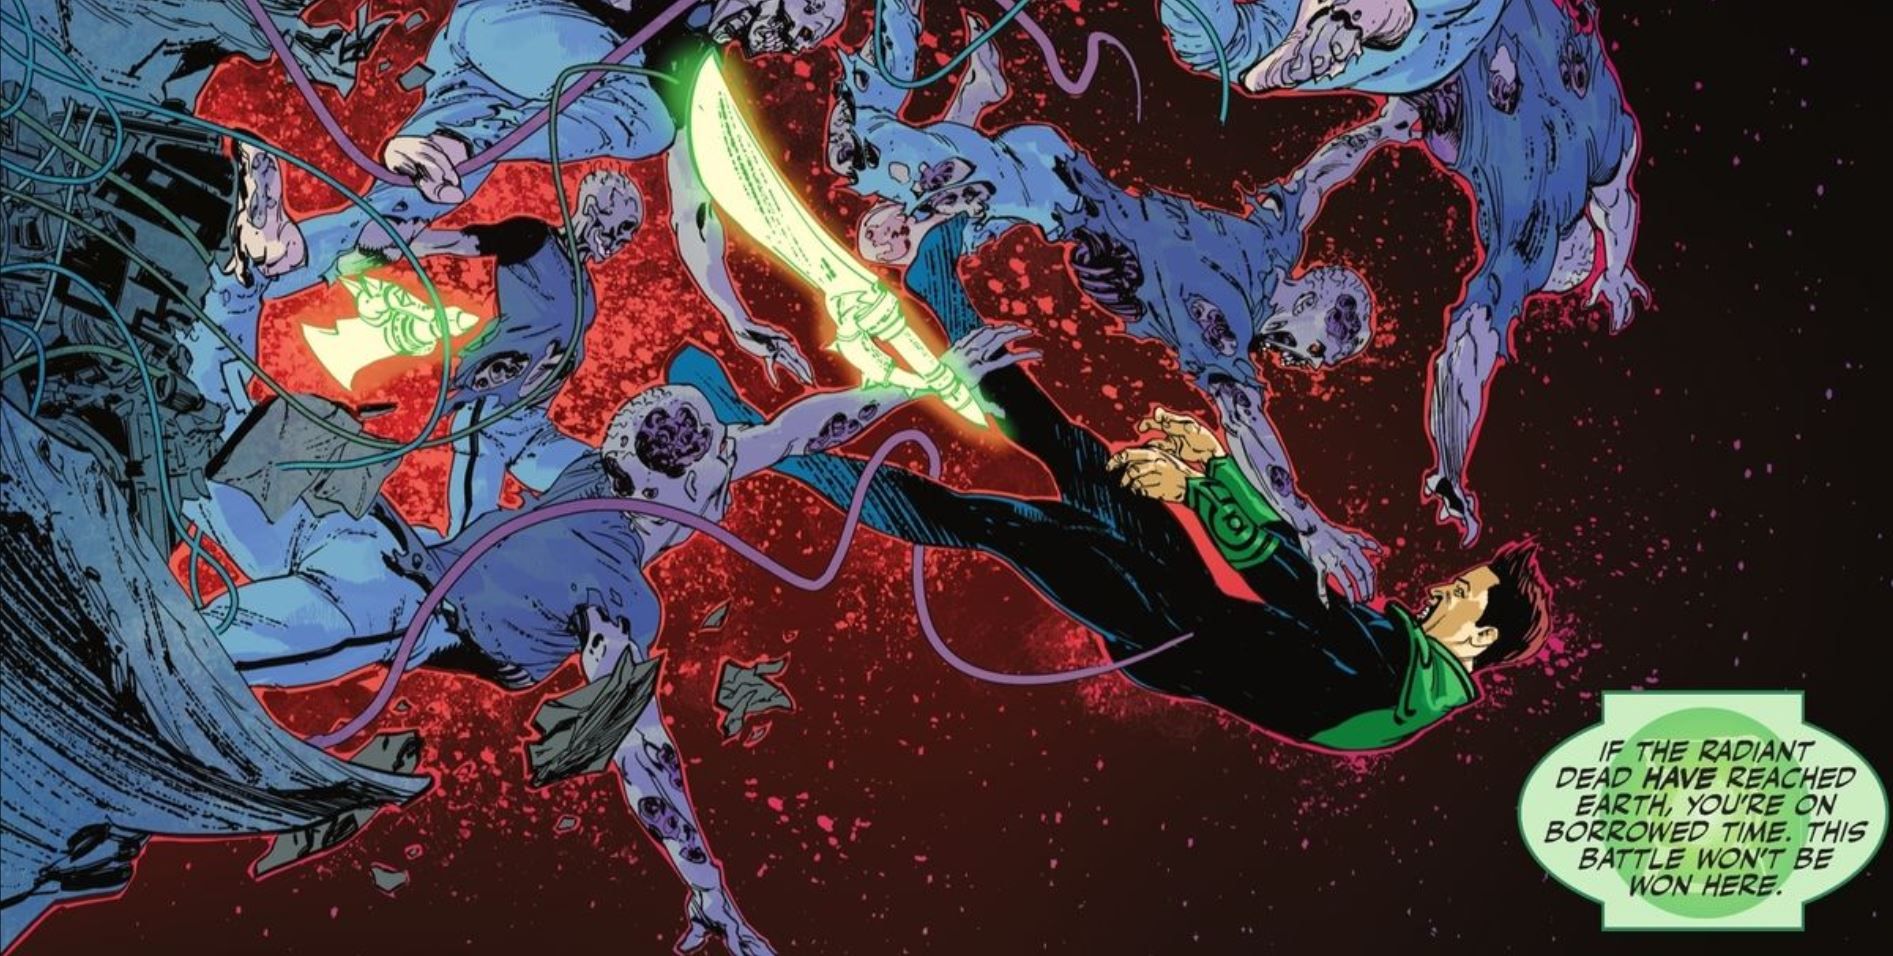 Green Lantern Shepherd vs Radiant Dead DC